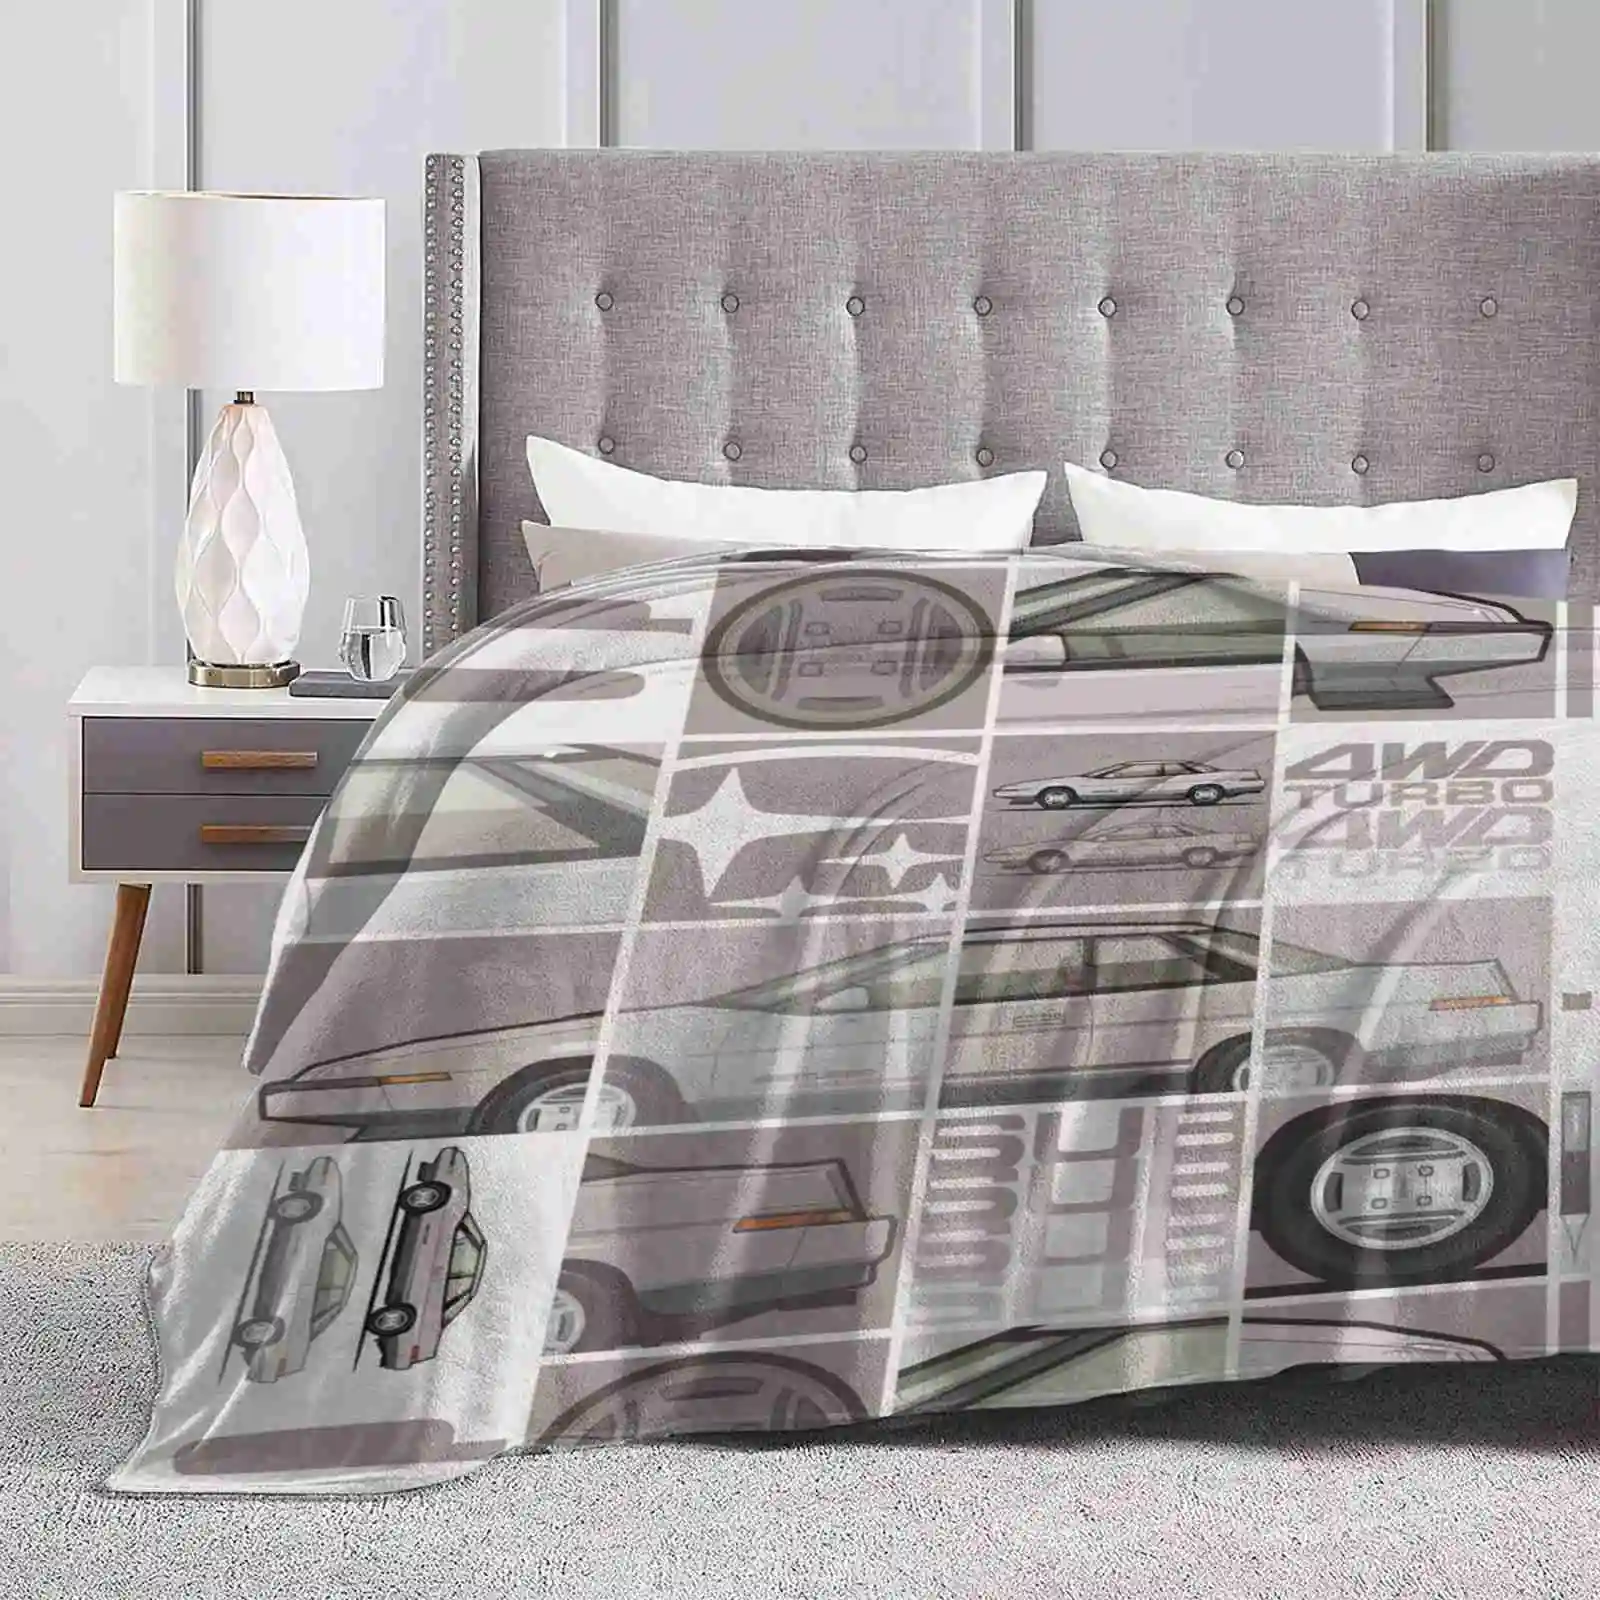 

Высококачественное удобное мягкое одеяло Alcyone Xt-Turbo Vortex Silver для кровати, дивана Wonder Wedge Jdm Subie 4Wd H6 Xt6 Turbo 80S